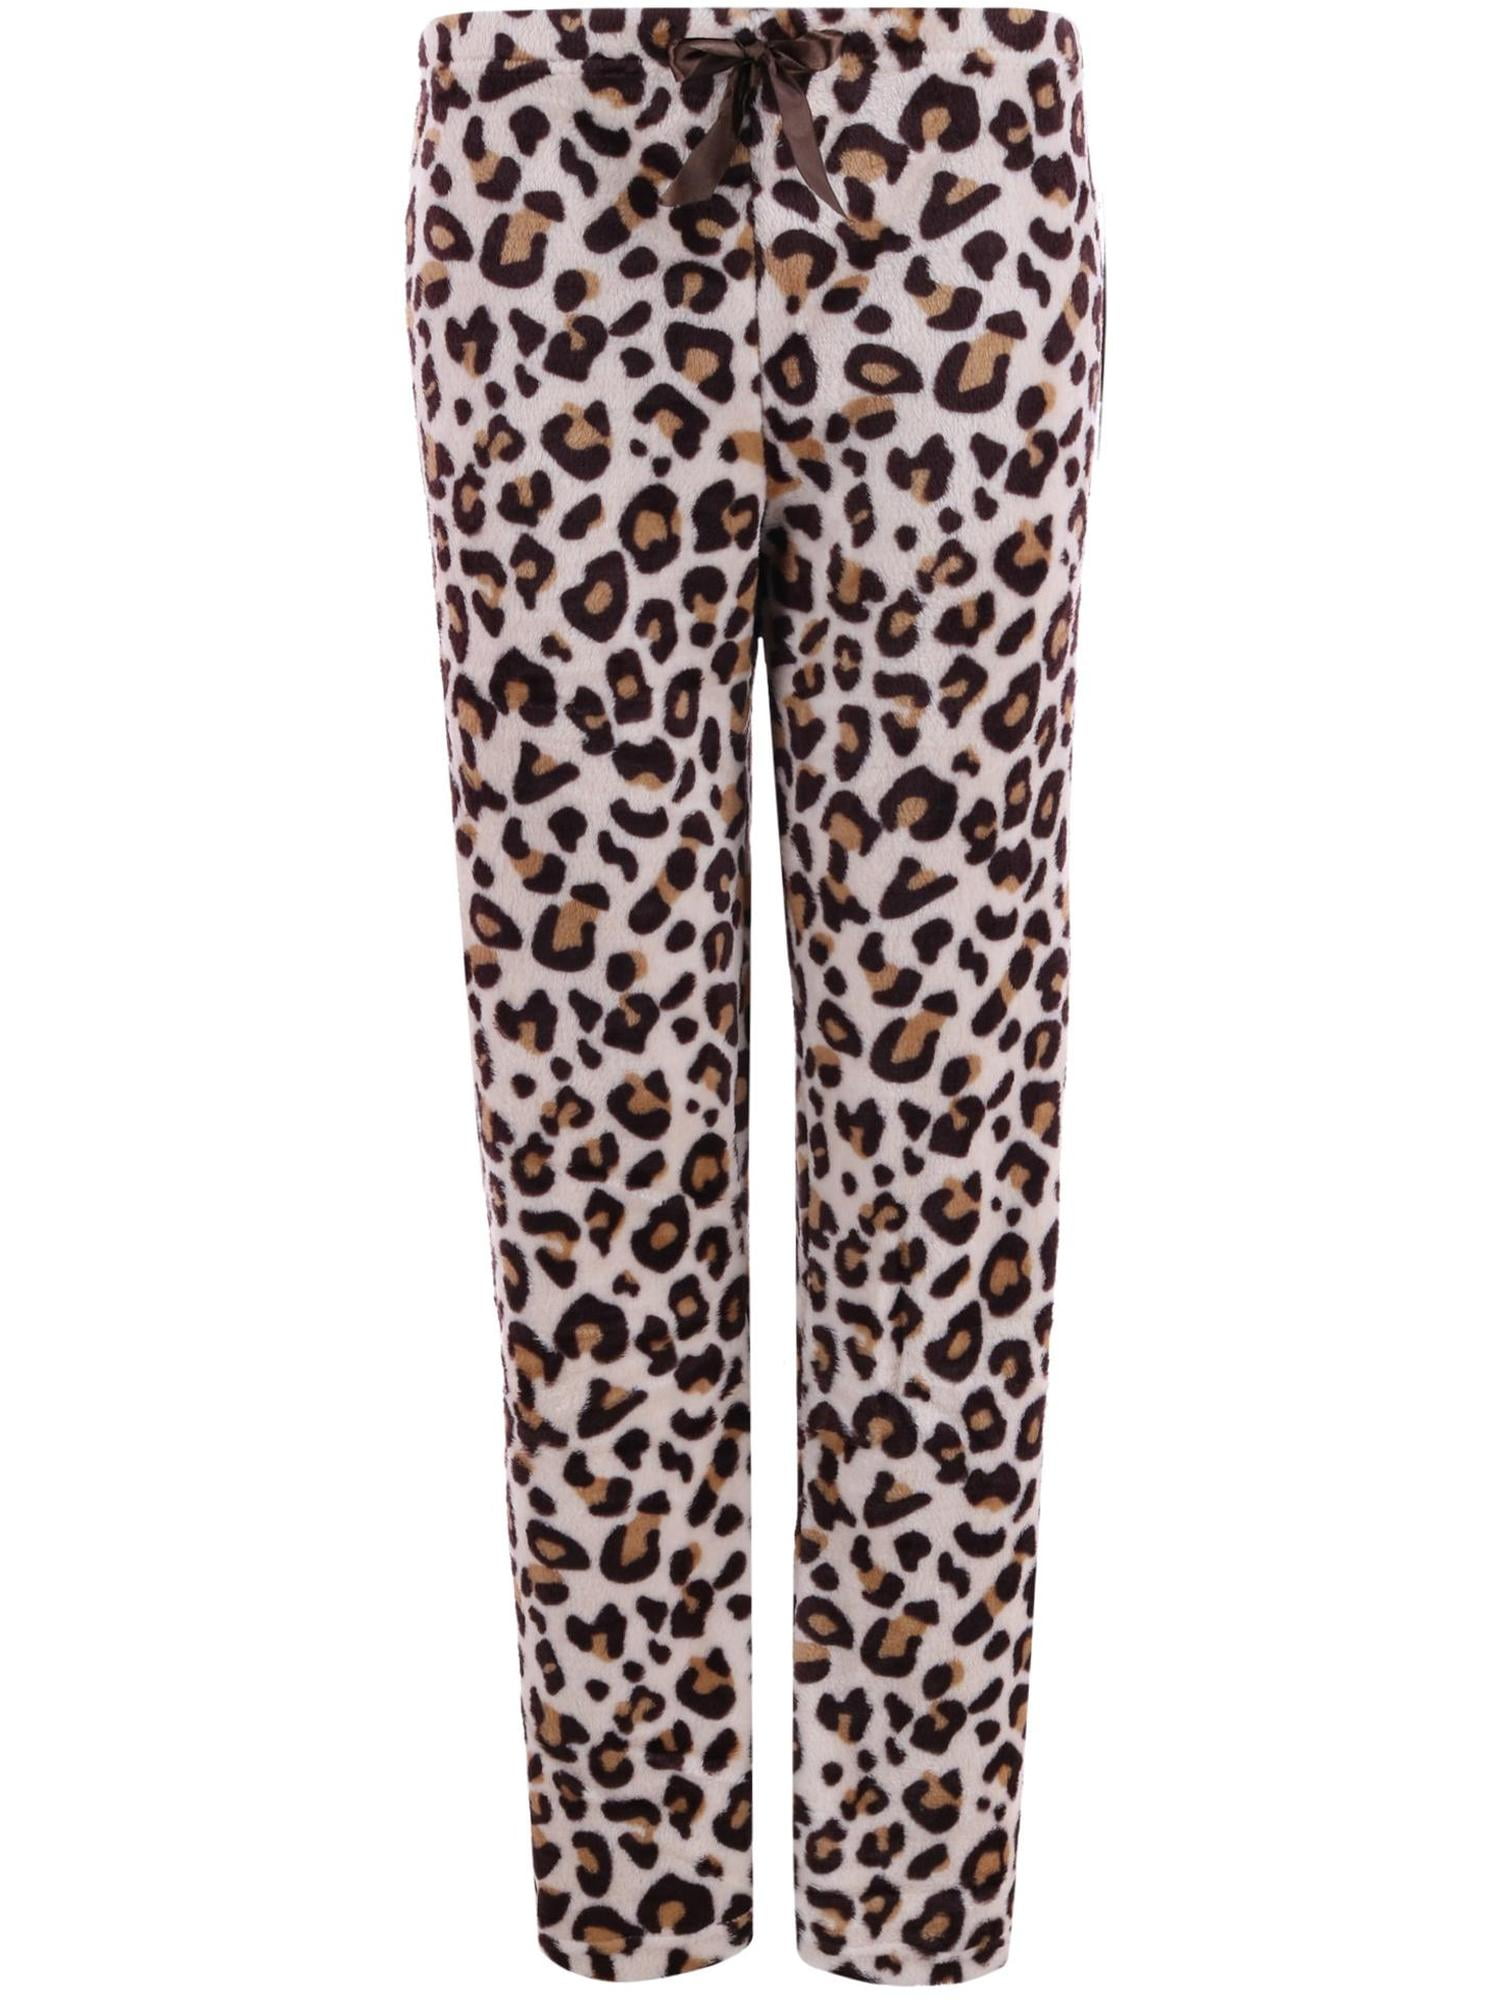 Saturdaze Leopard Print Pajama Pants (Women's Plus) - Walmart.com